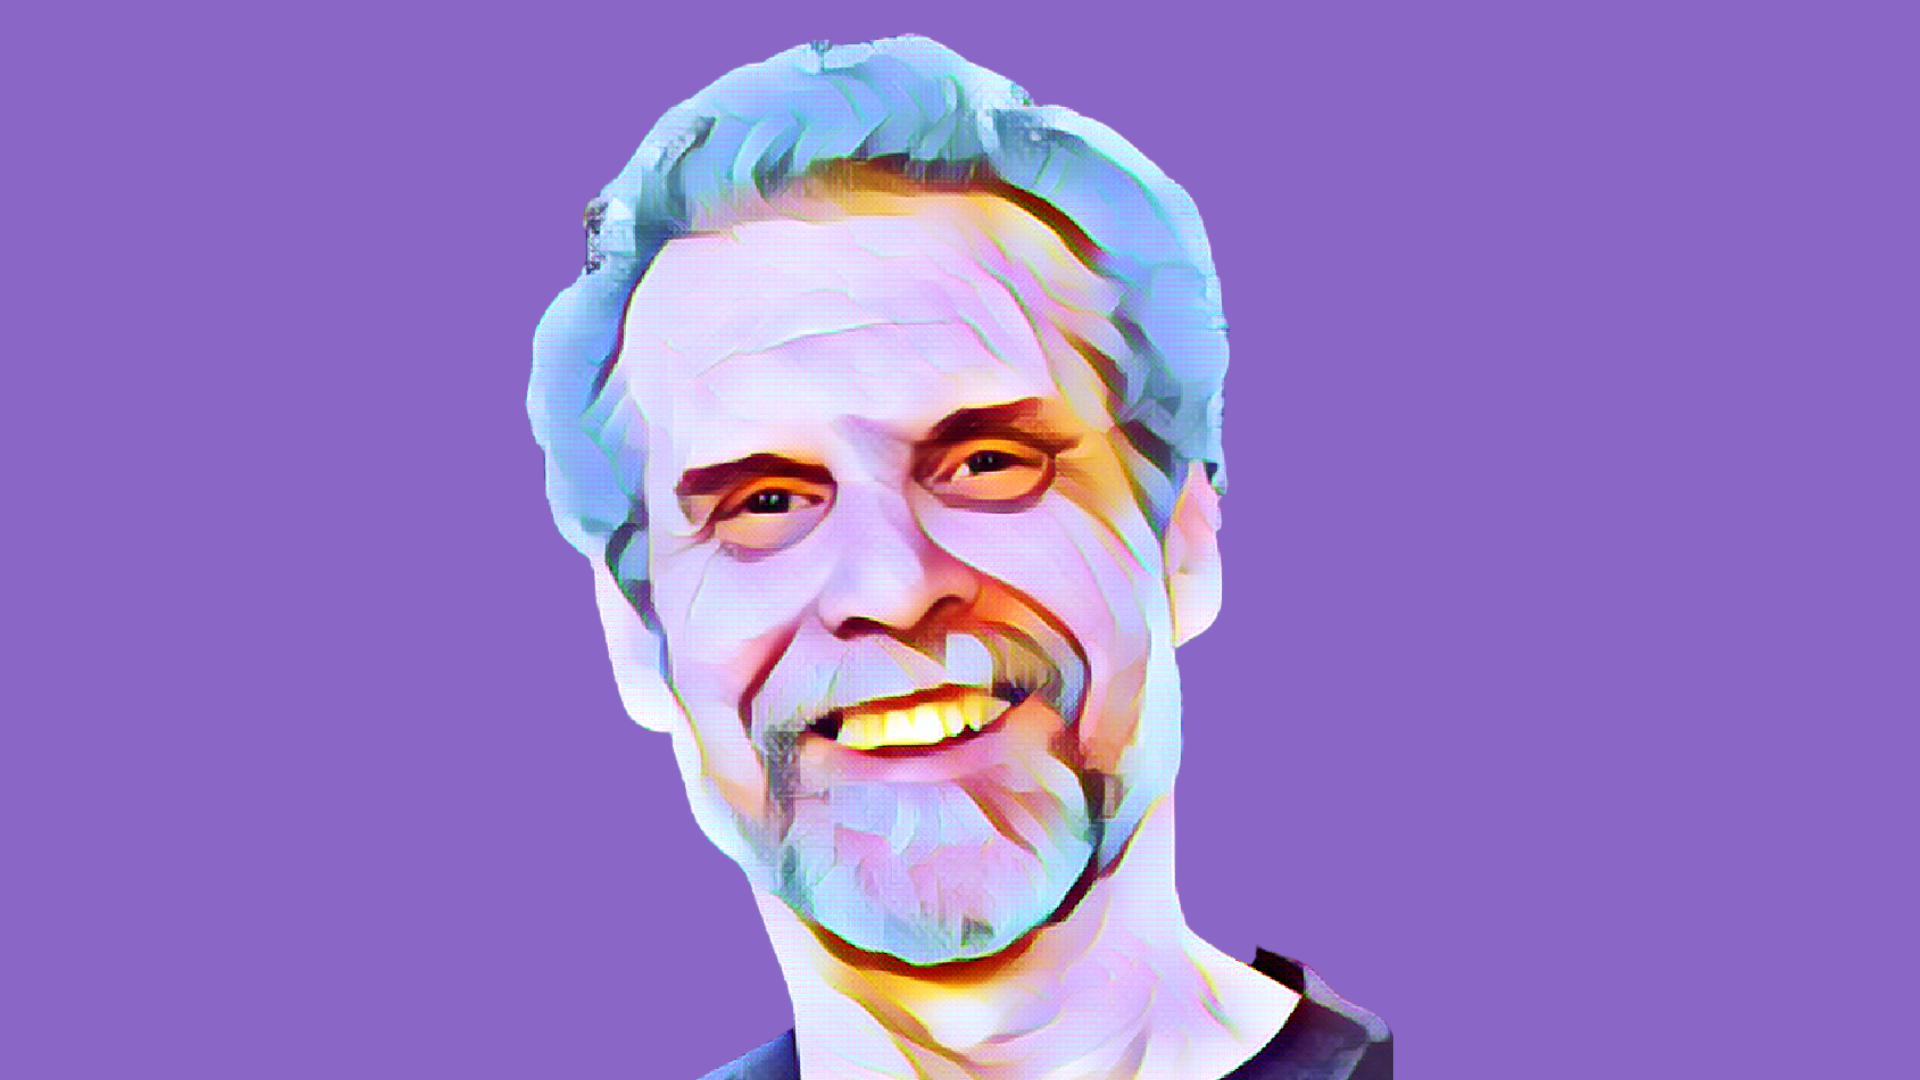 Daniel Goleman animated on a purple background